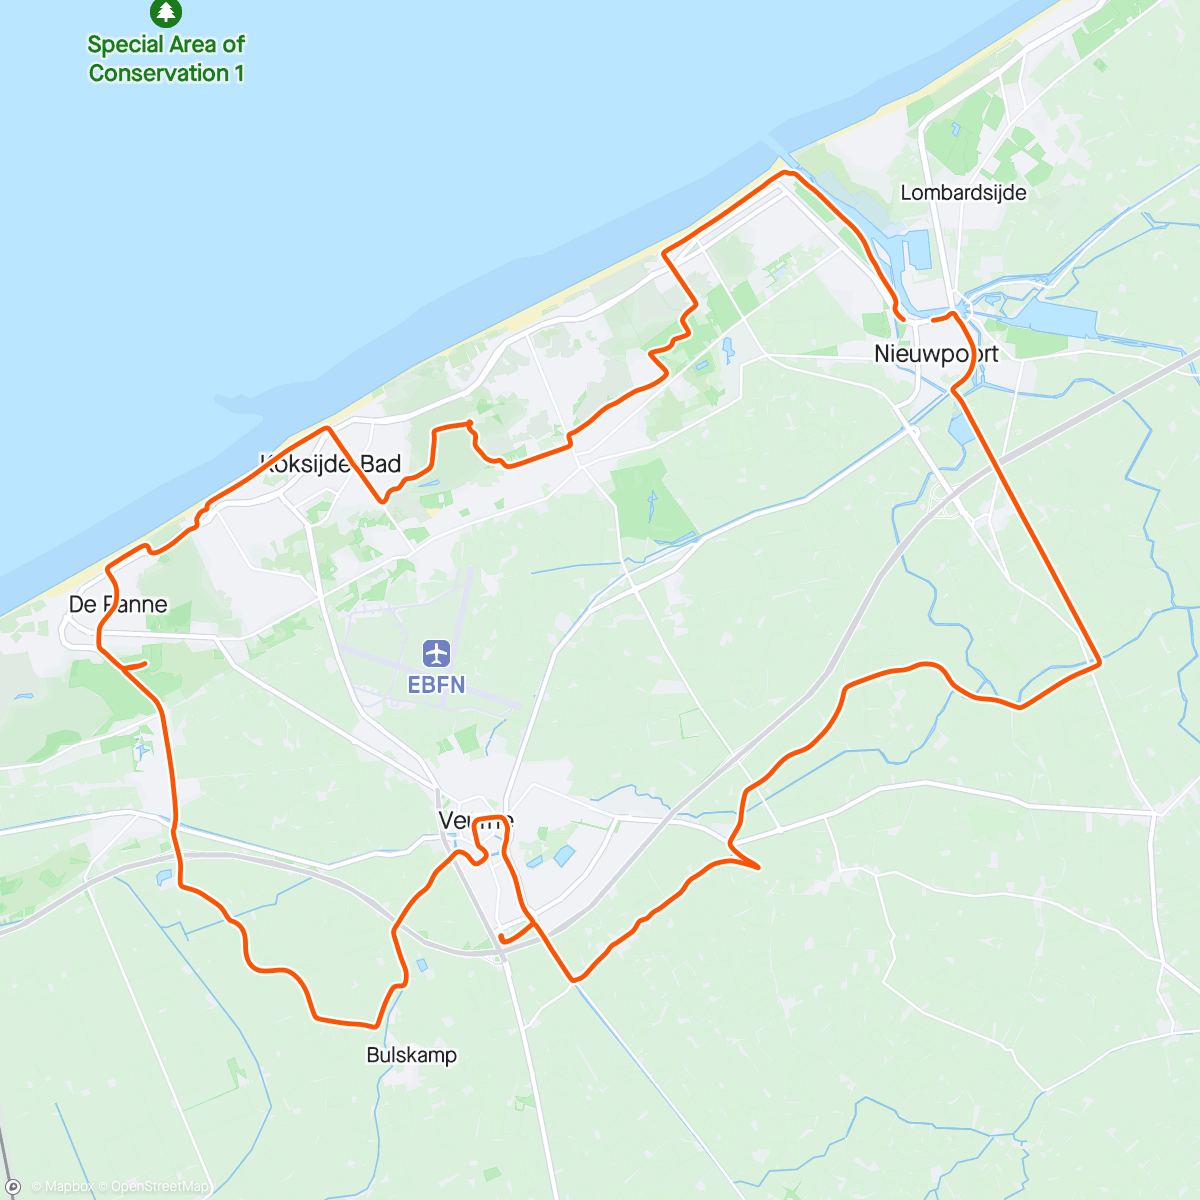 「Morning E-Bike Ride」活動的地圖